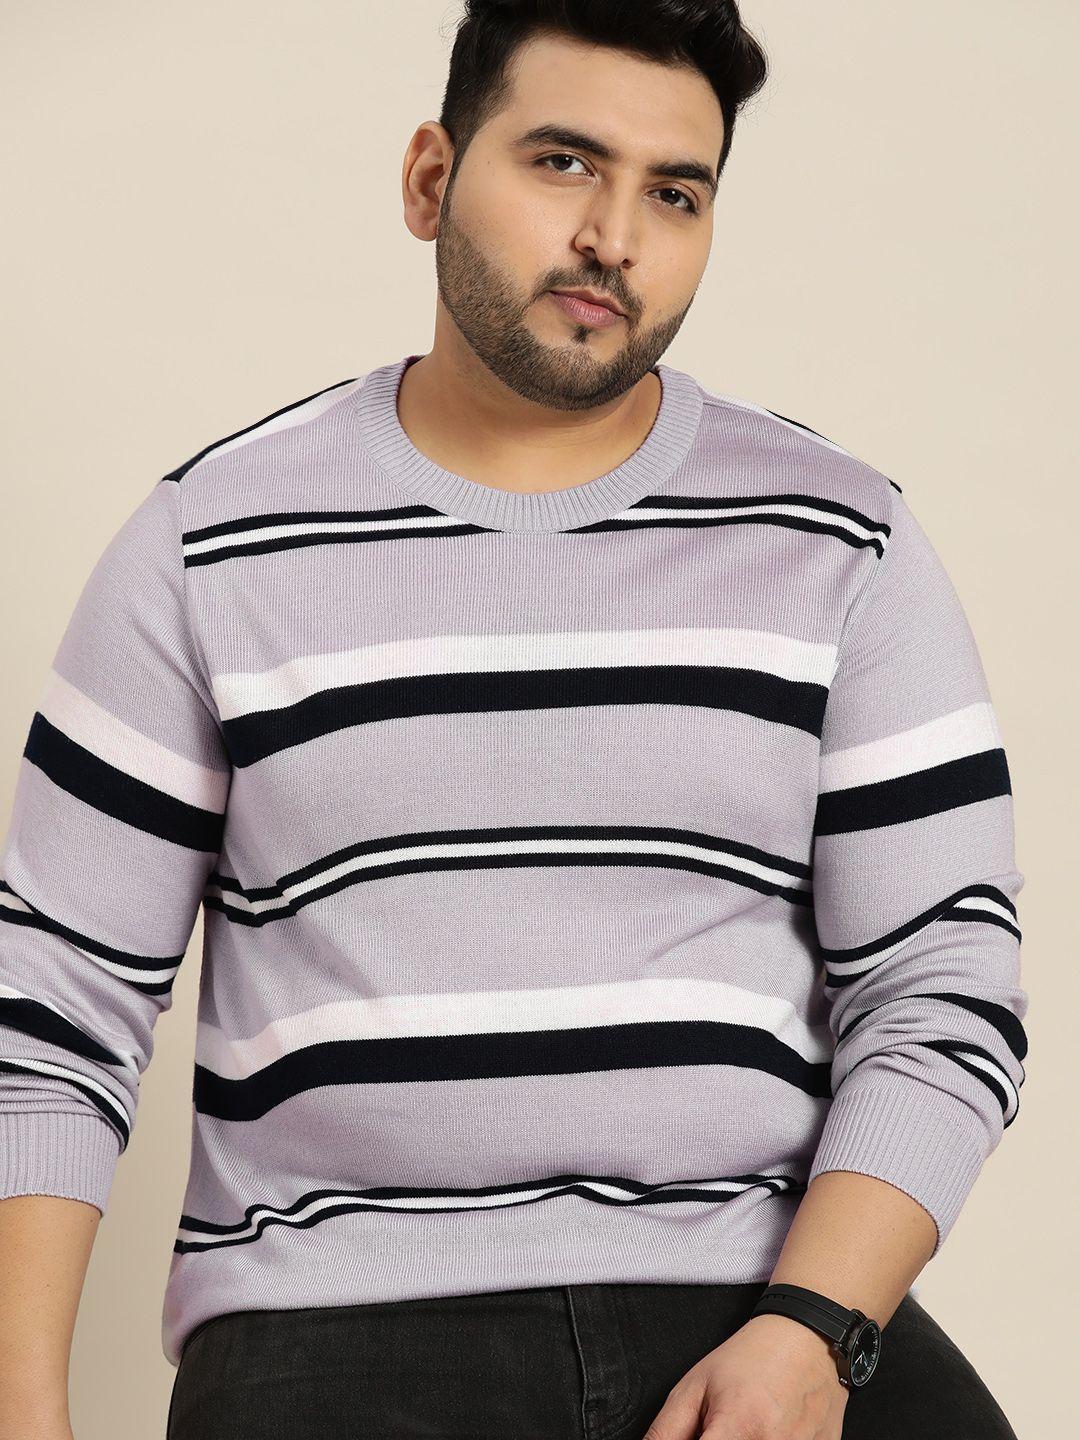 sztori men plus size lavender & white striped pullover